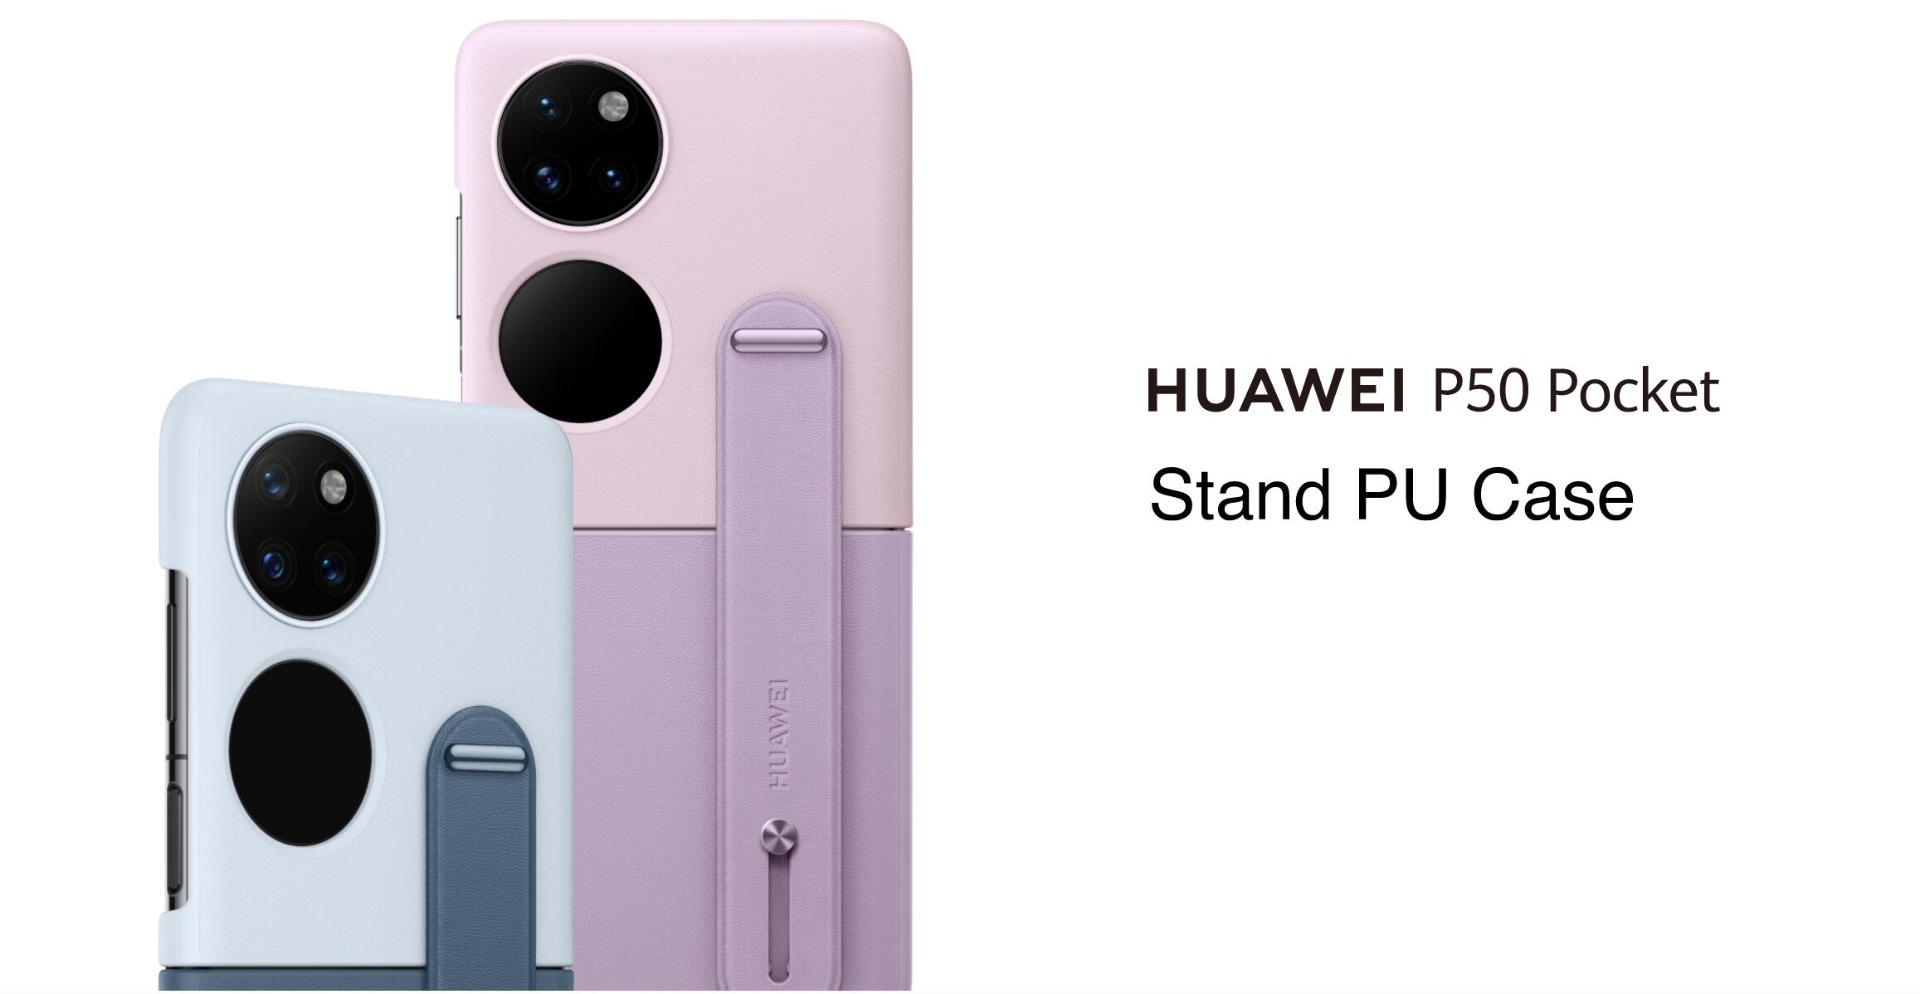 HUAWEI P50 Pocket Stand PU Case